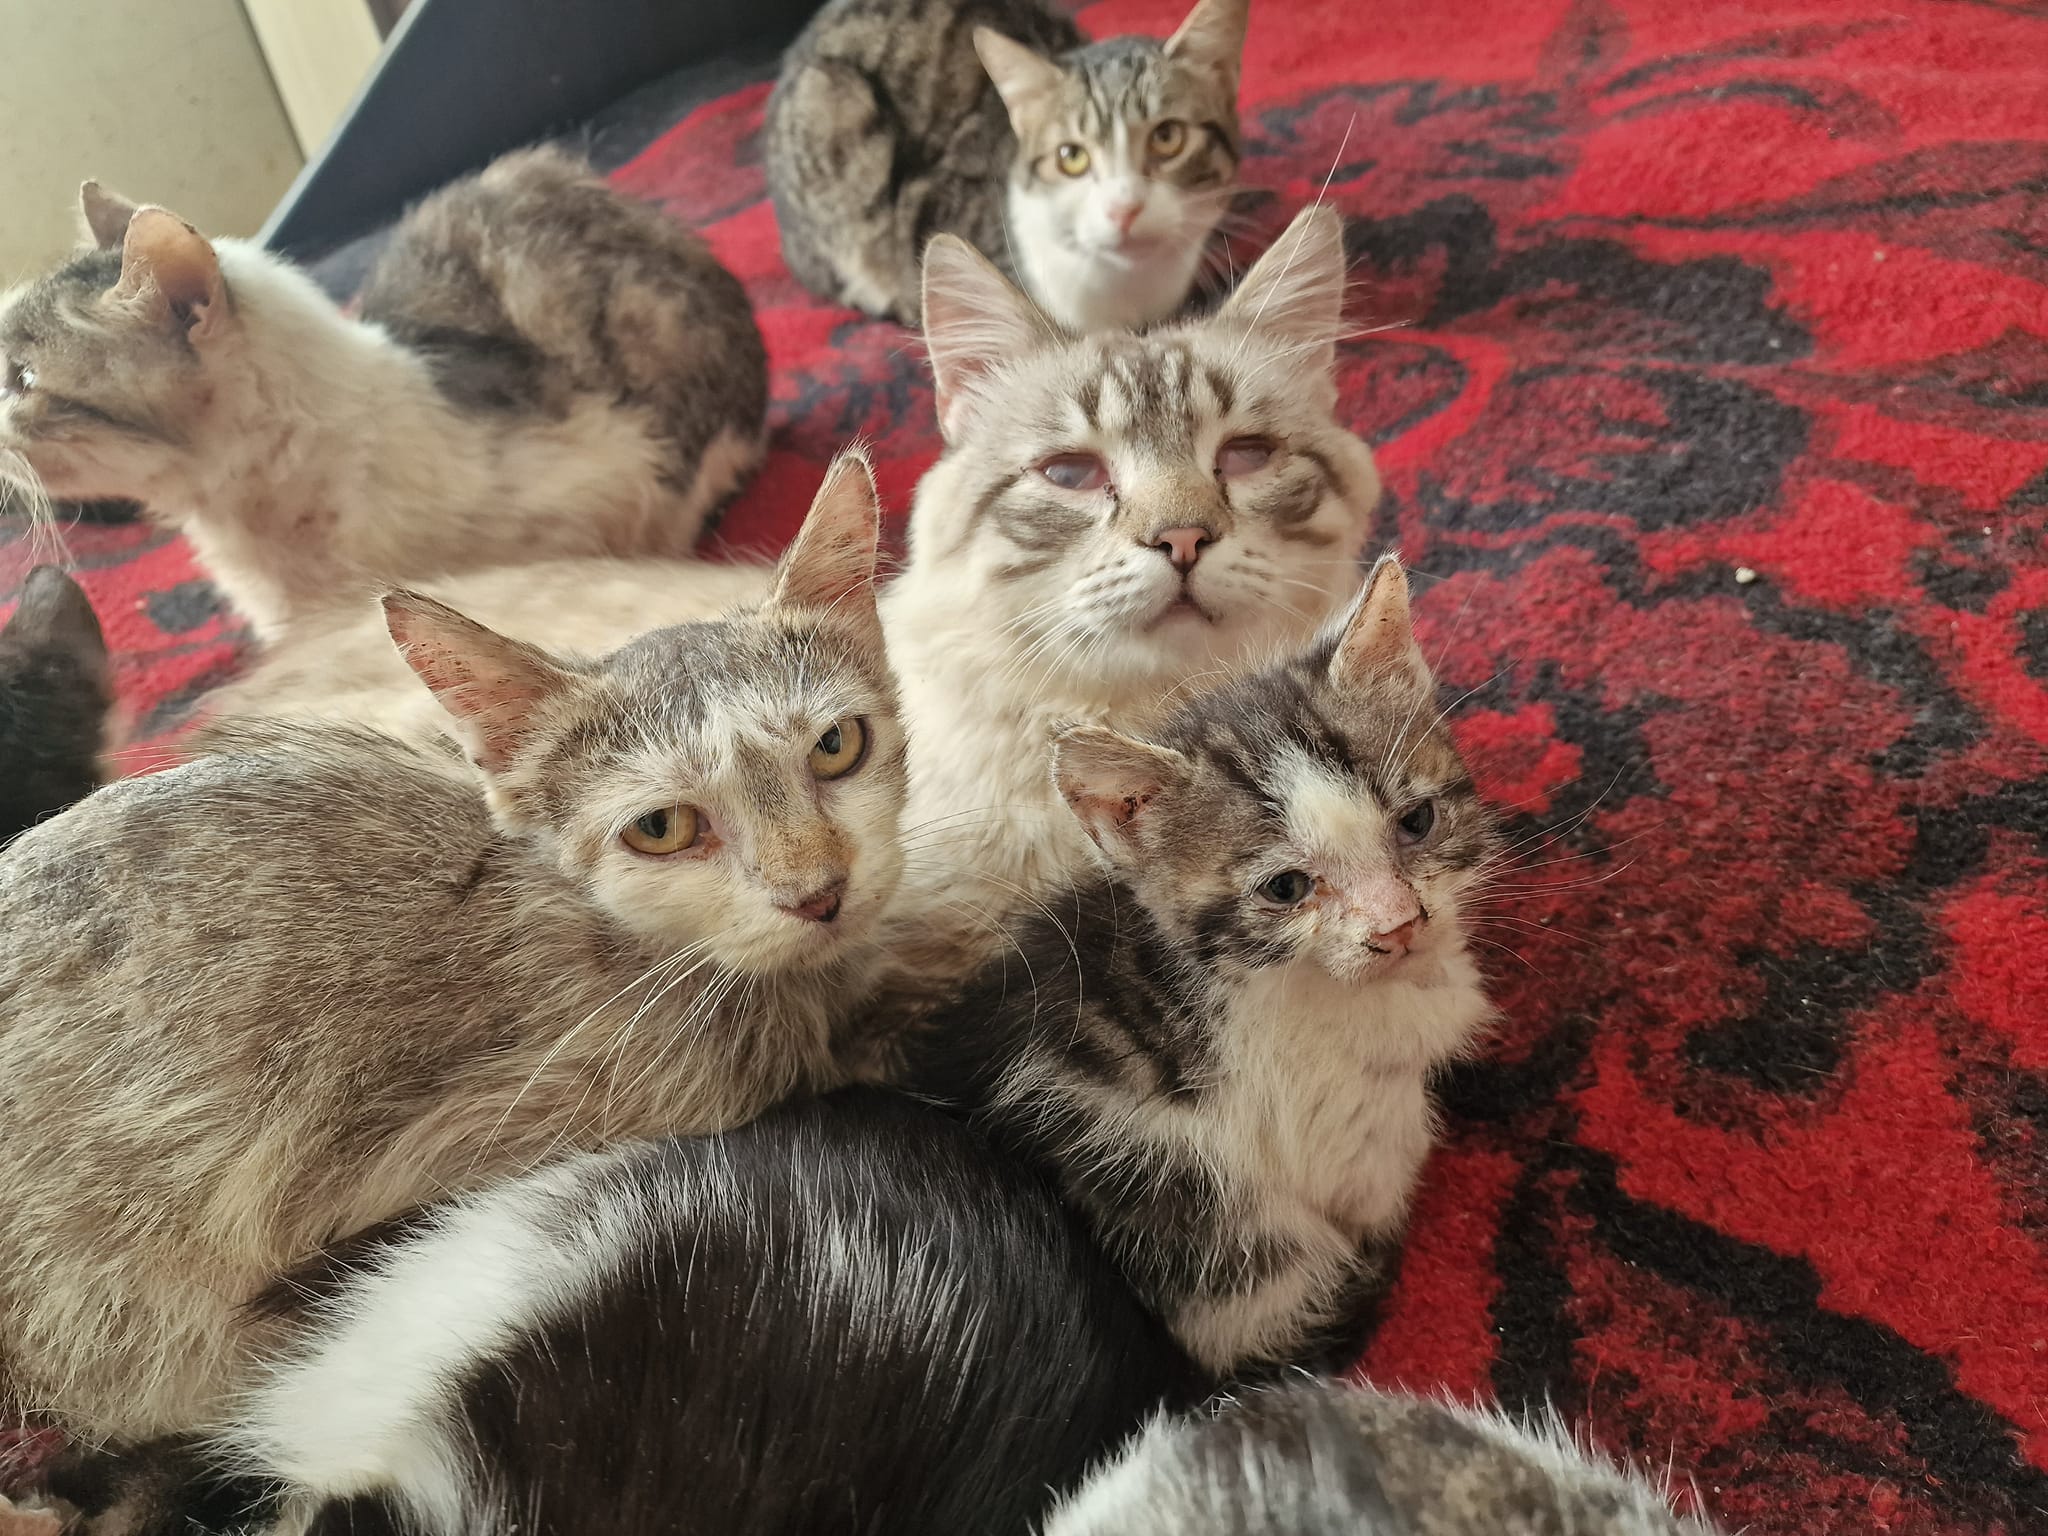 Adopt the kittens